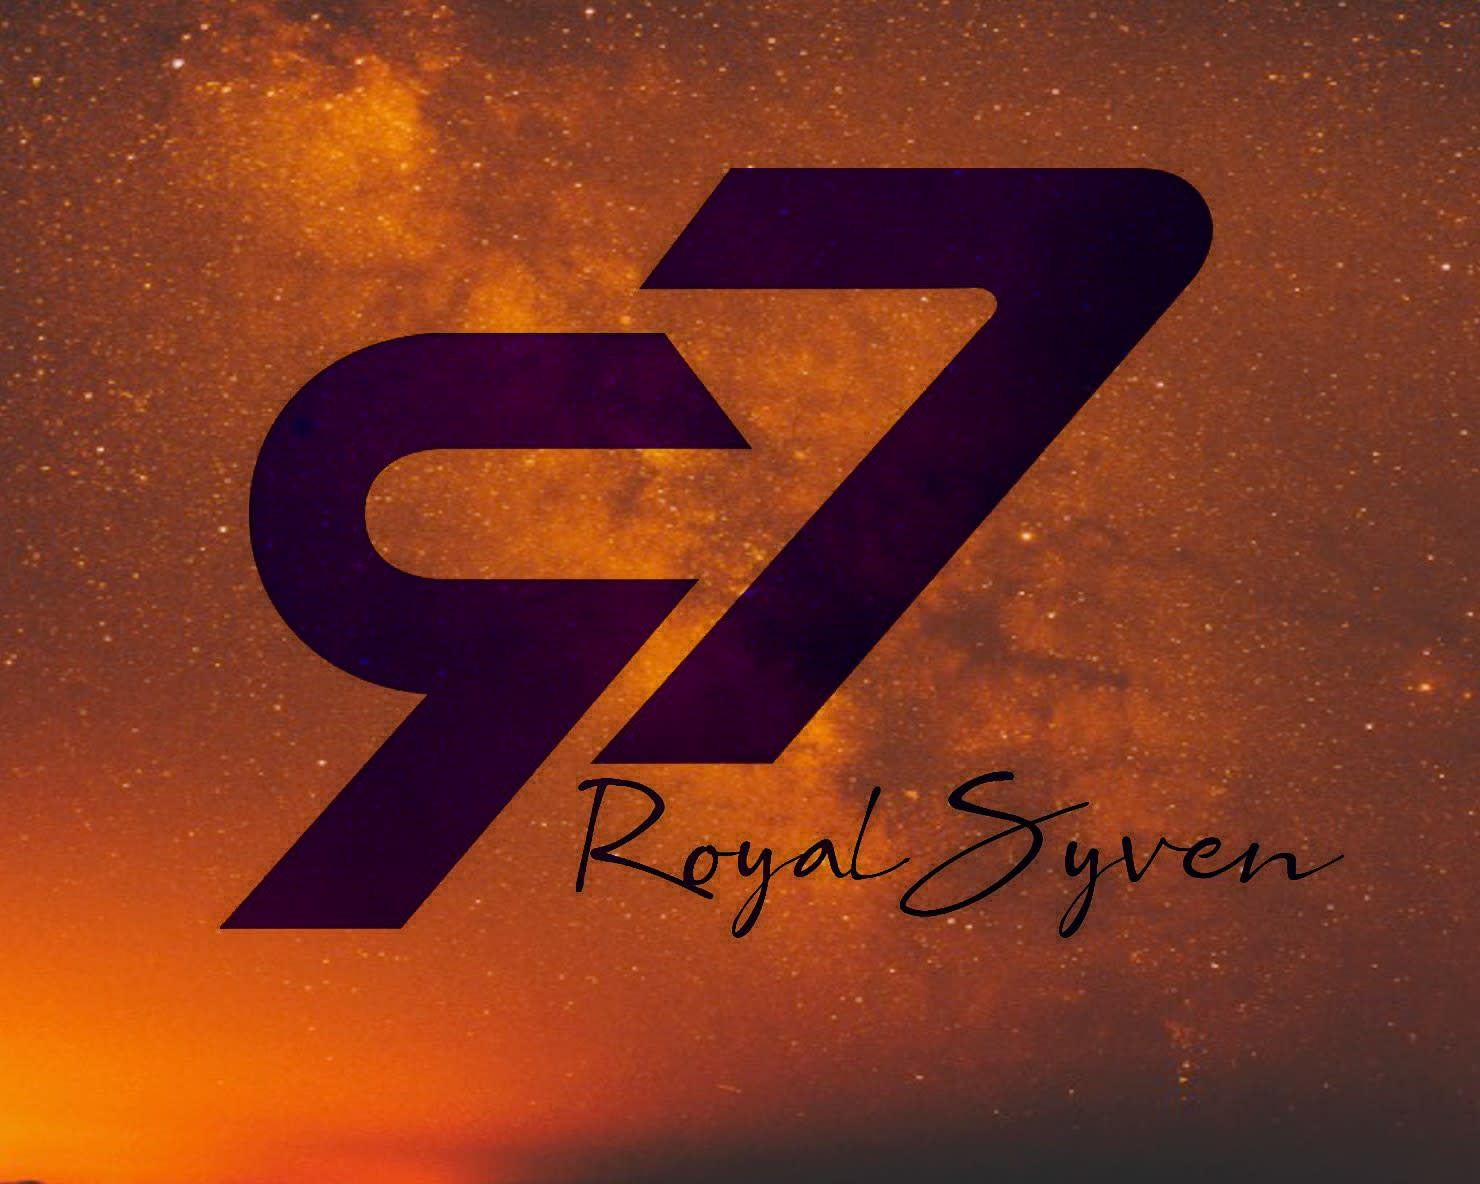 Royal Syven